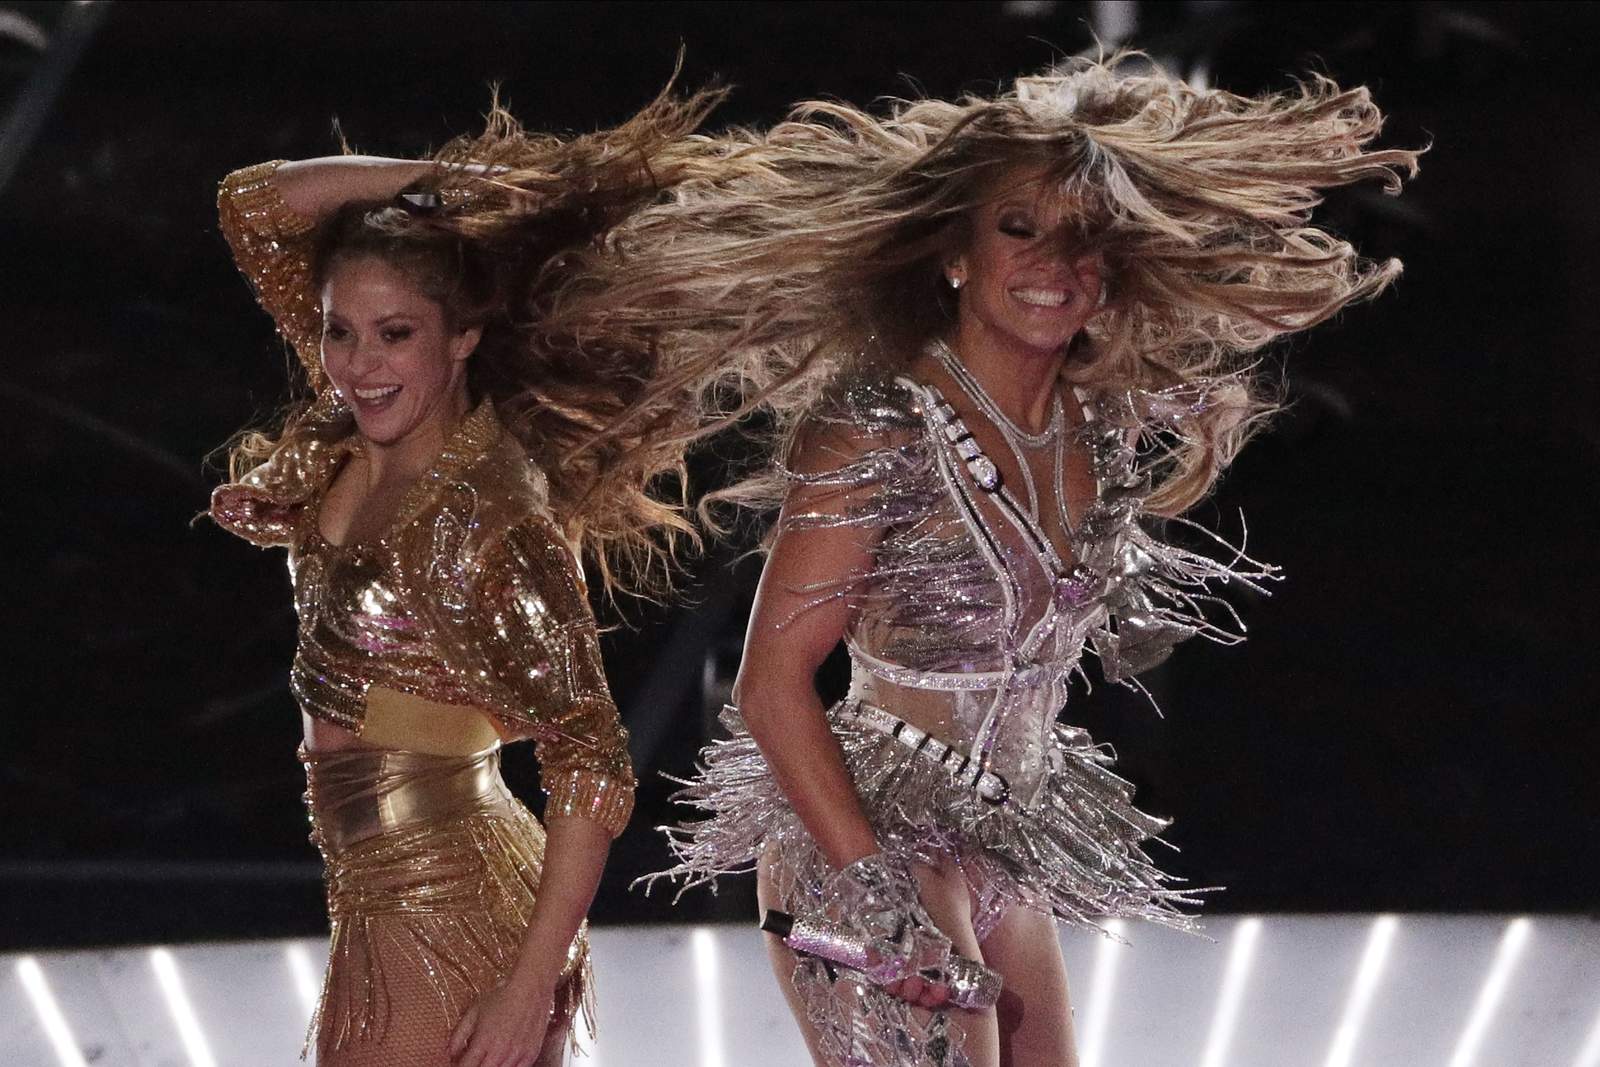 Lopez, Shakira in joyful, exuberant halftime show during Super Bowl LIV